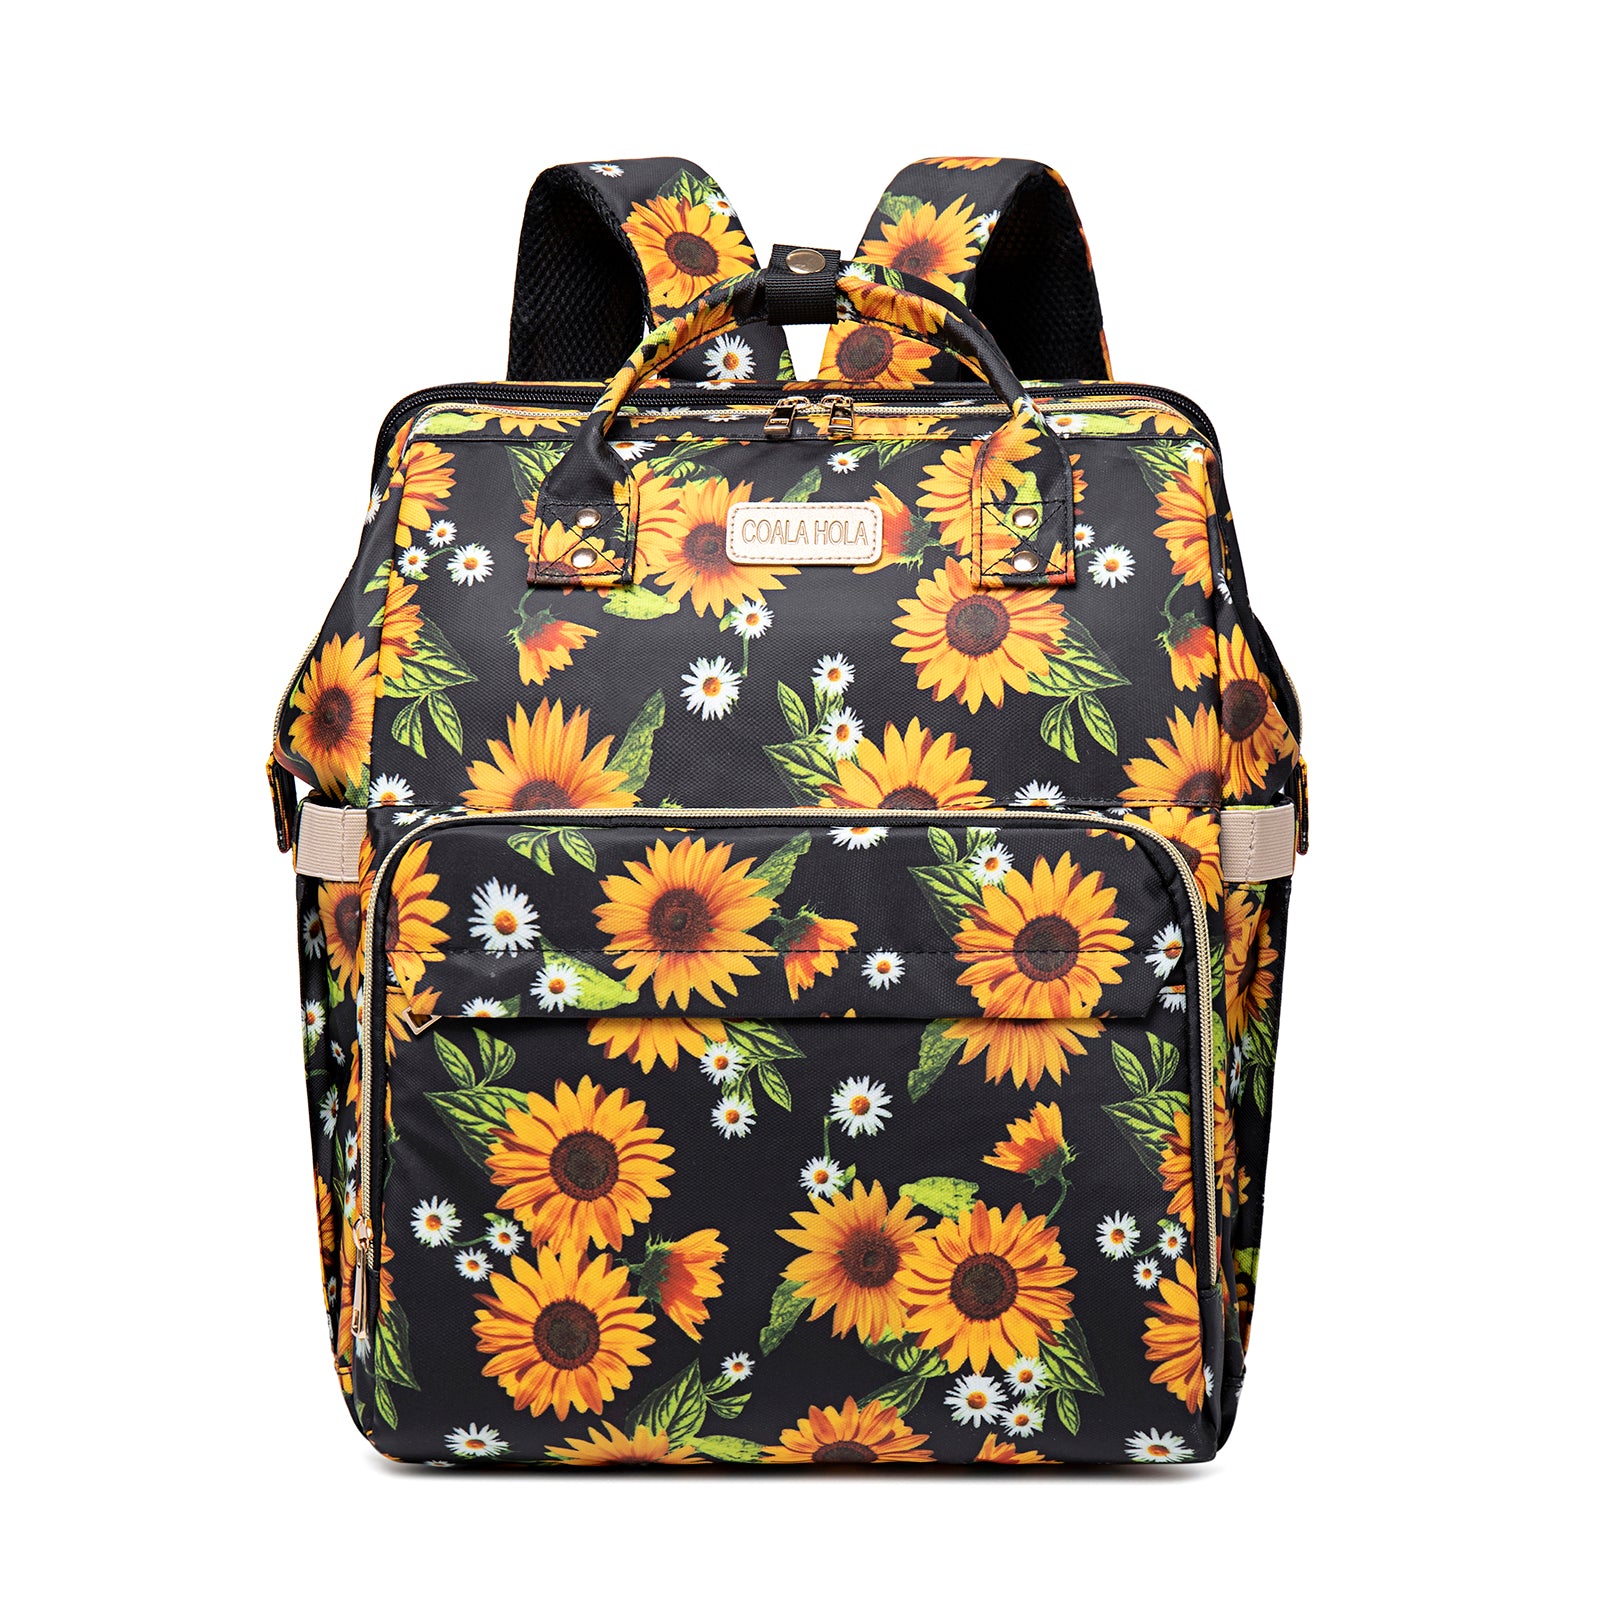 4 in 1 Baby Diaper Bag Backpack - Sunflower Vertical diaper bag